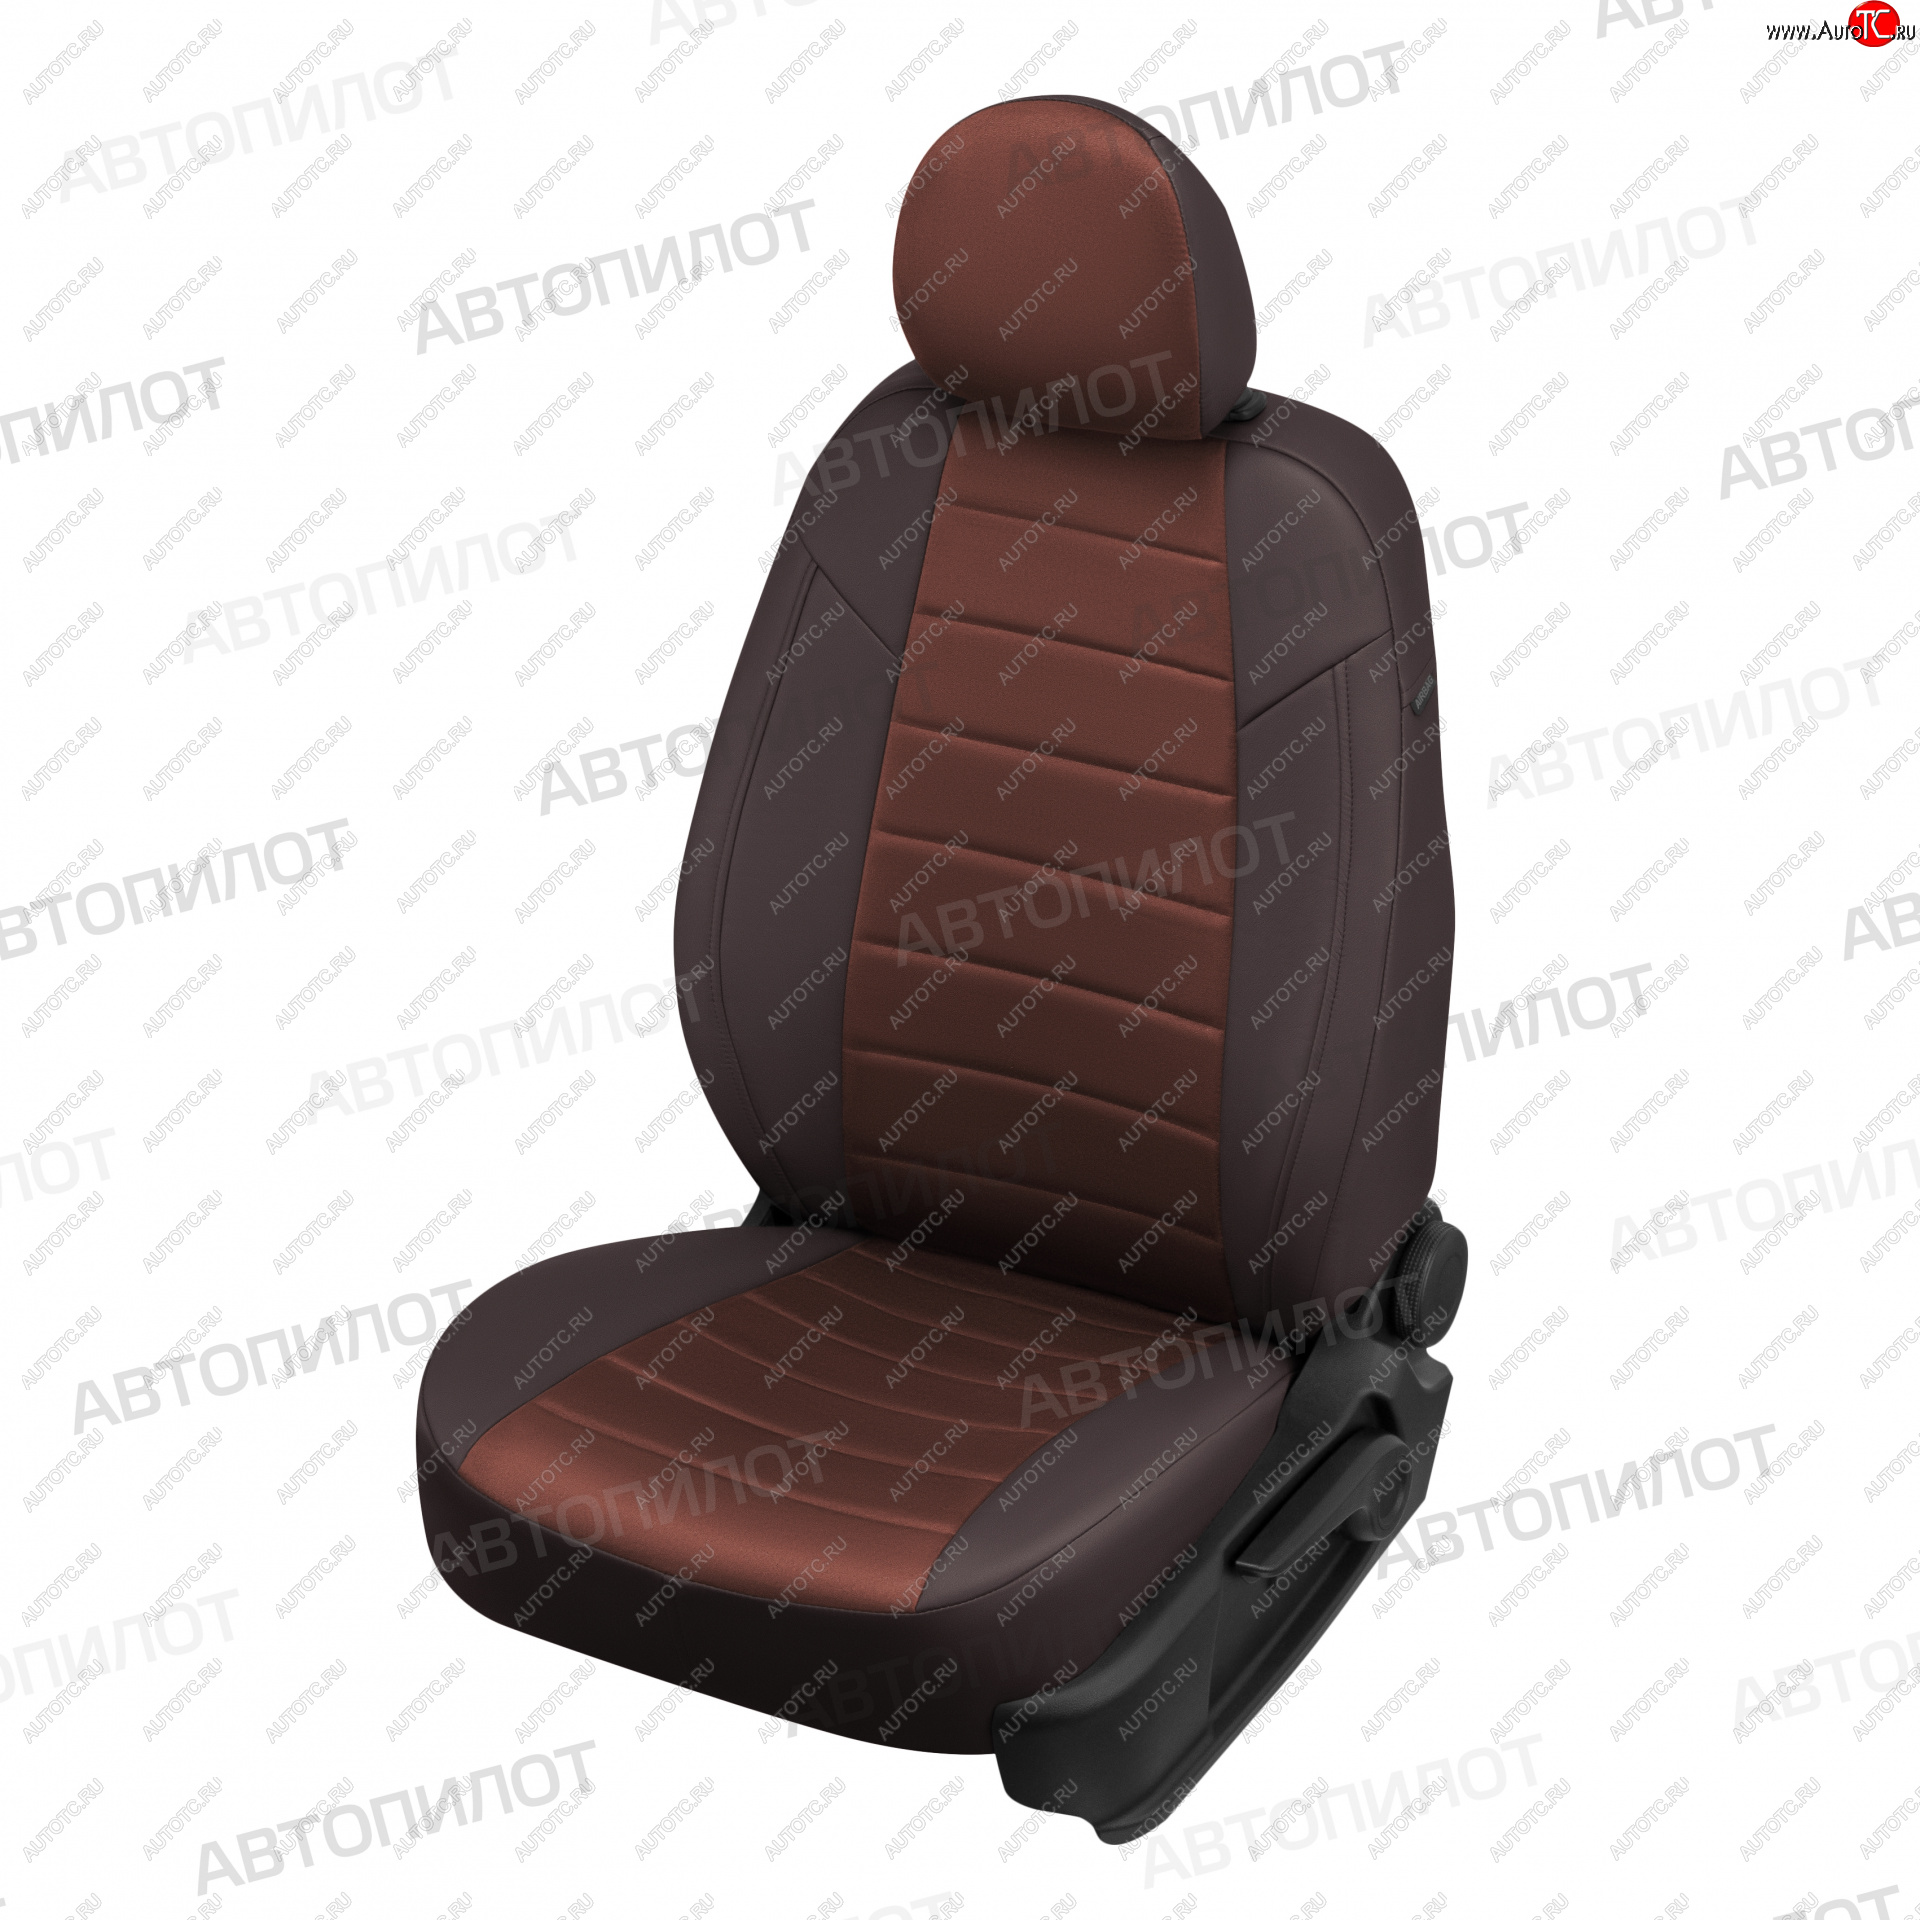 13 449 р. Чехлы сидений (экокожа/алькантара, Classic) Автопилот  KIA Cerato  3 YD (2013-2019) (шоколад)